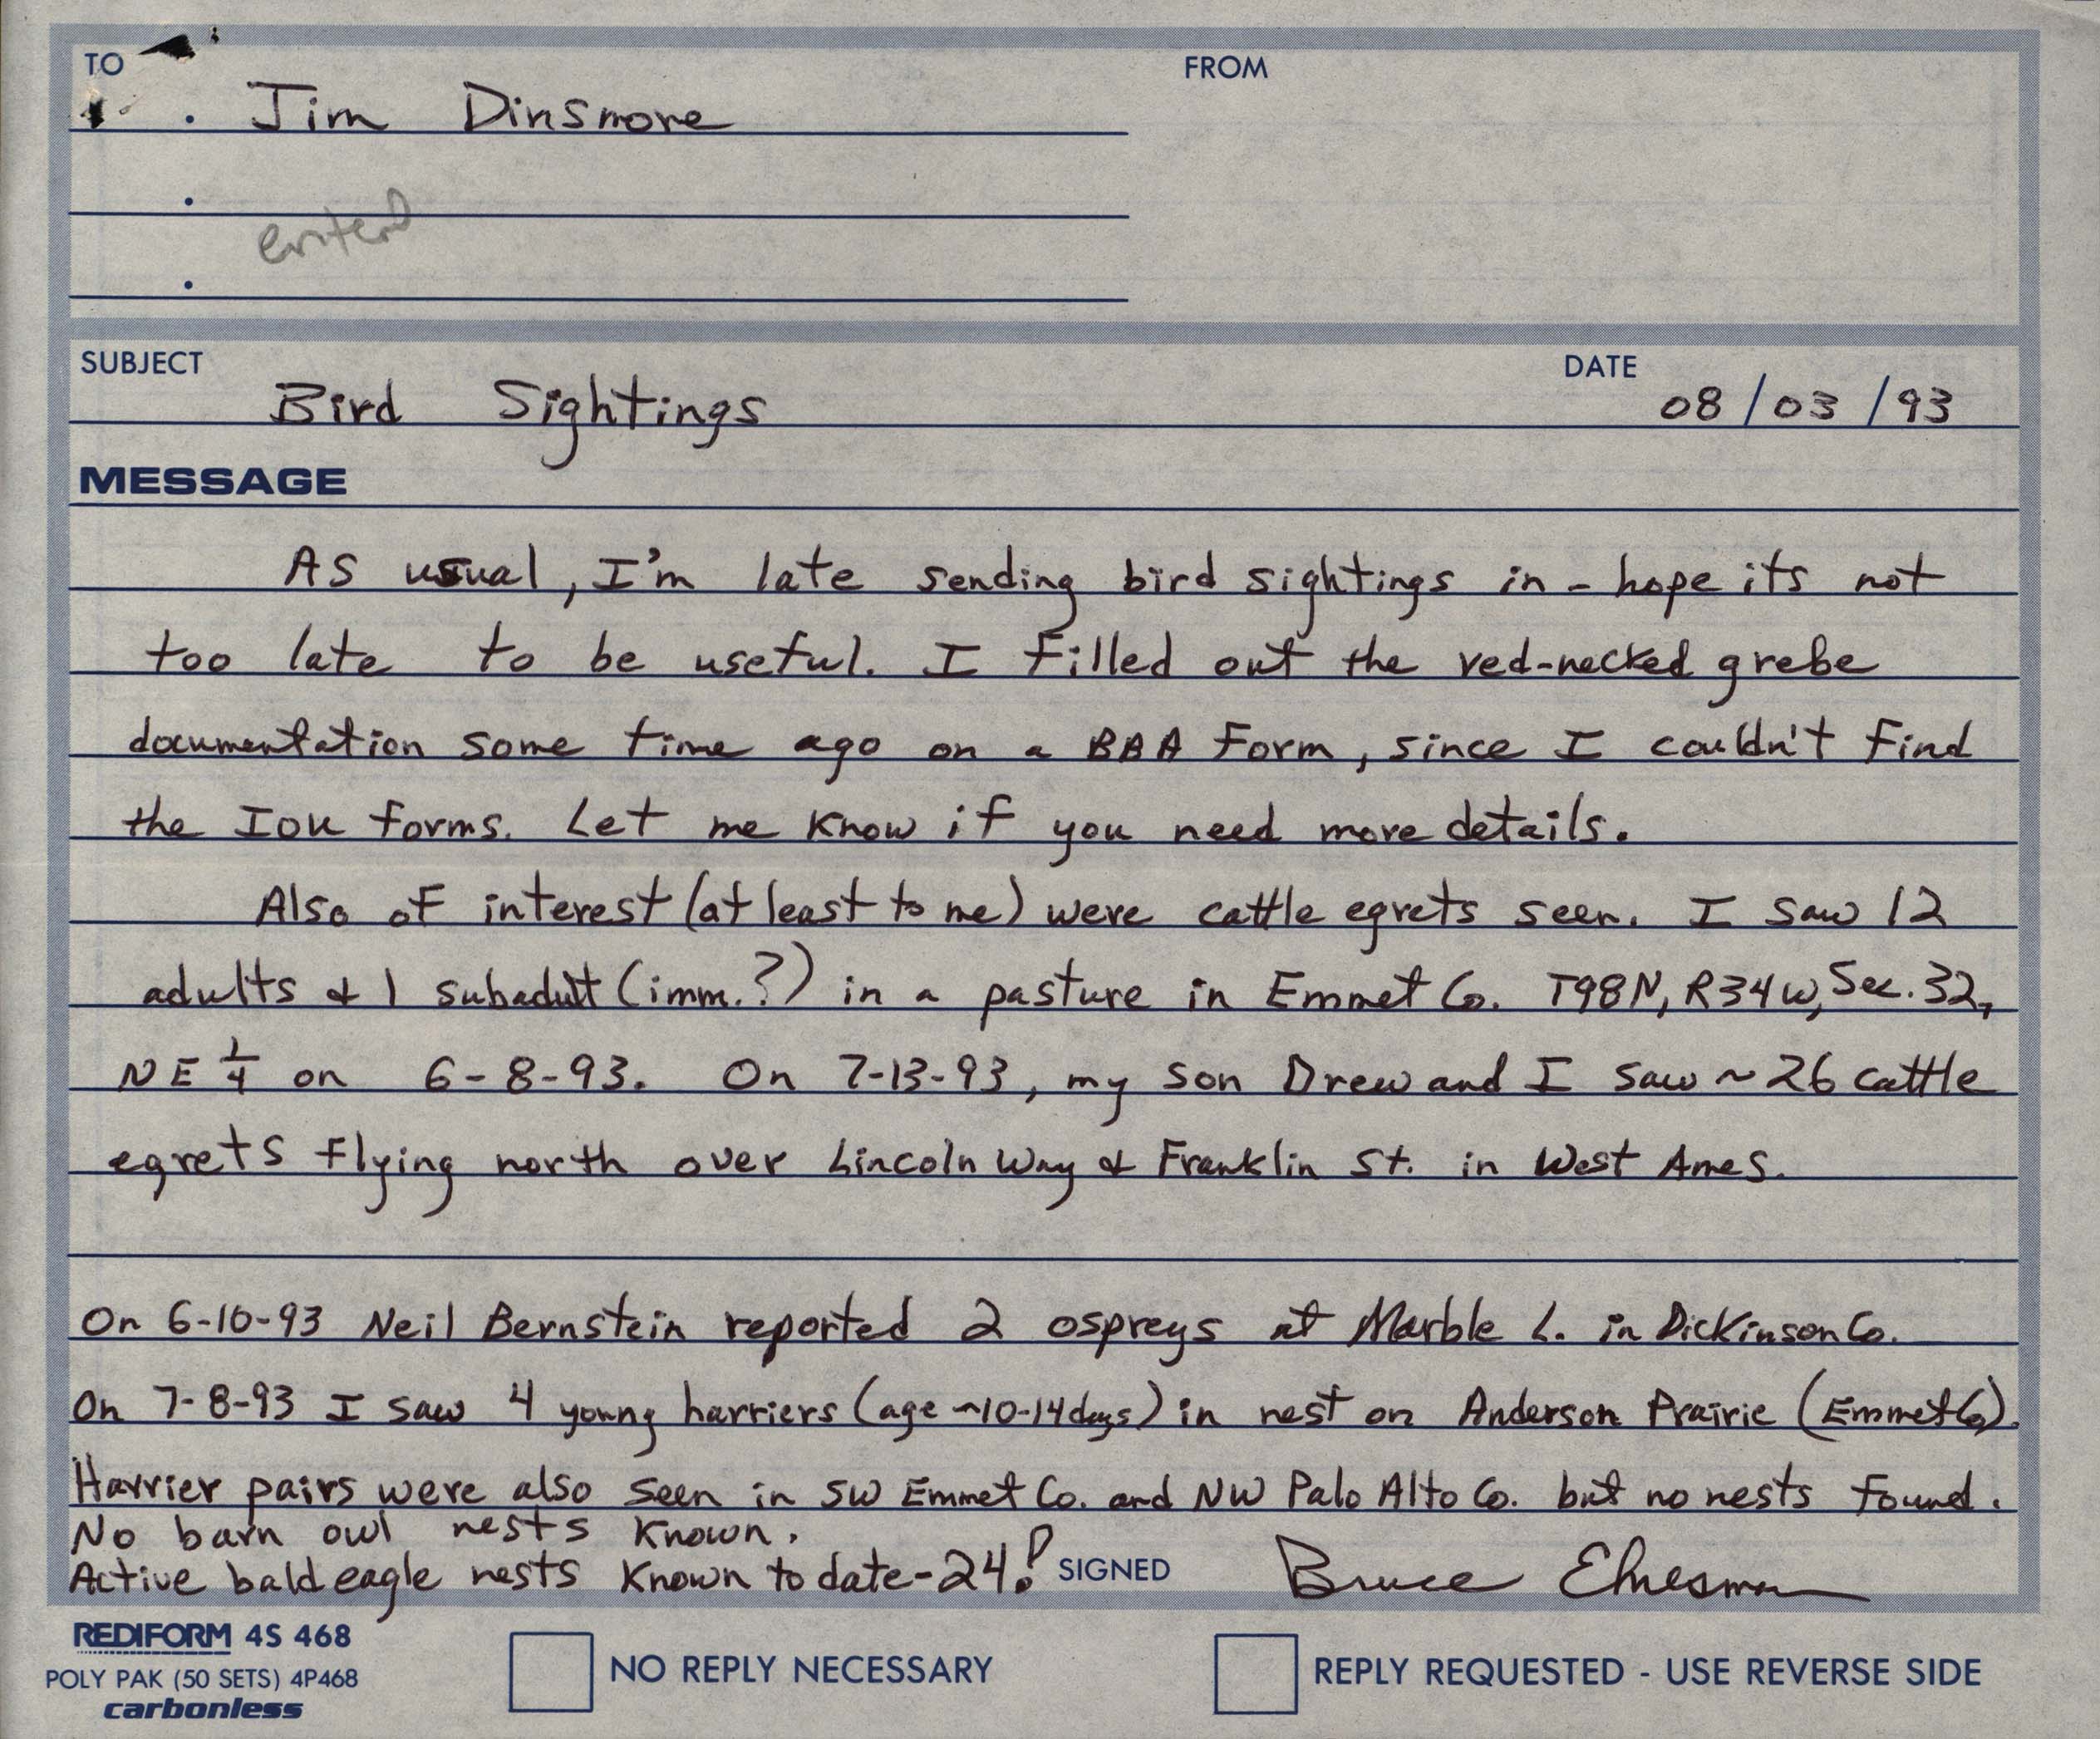 Bruce Ehresman letter to James J. Dinsmore regarding summer bird sightings, August 3, 1993